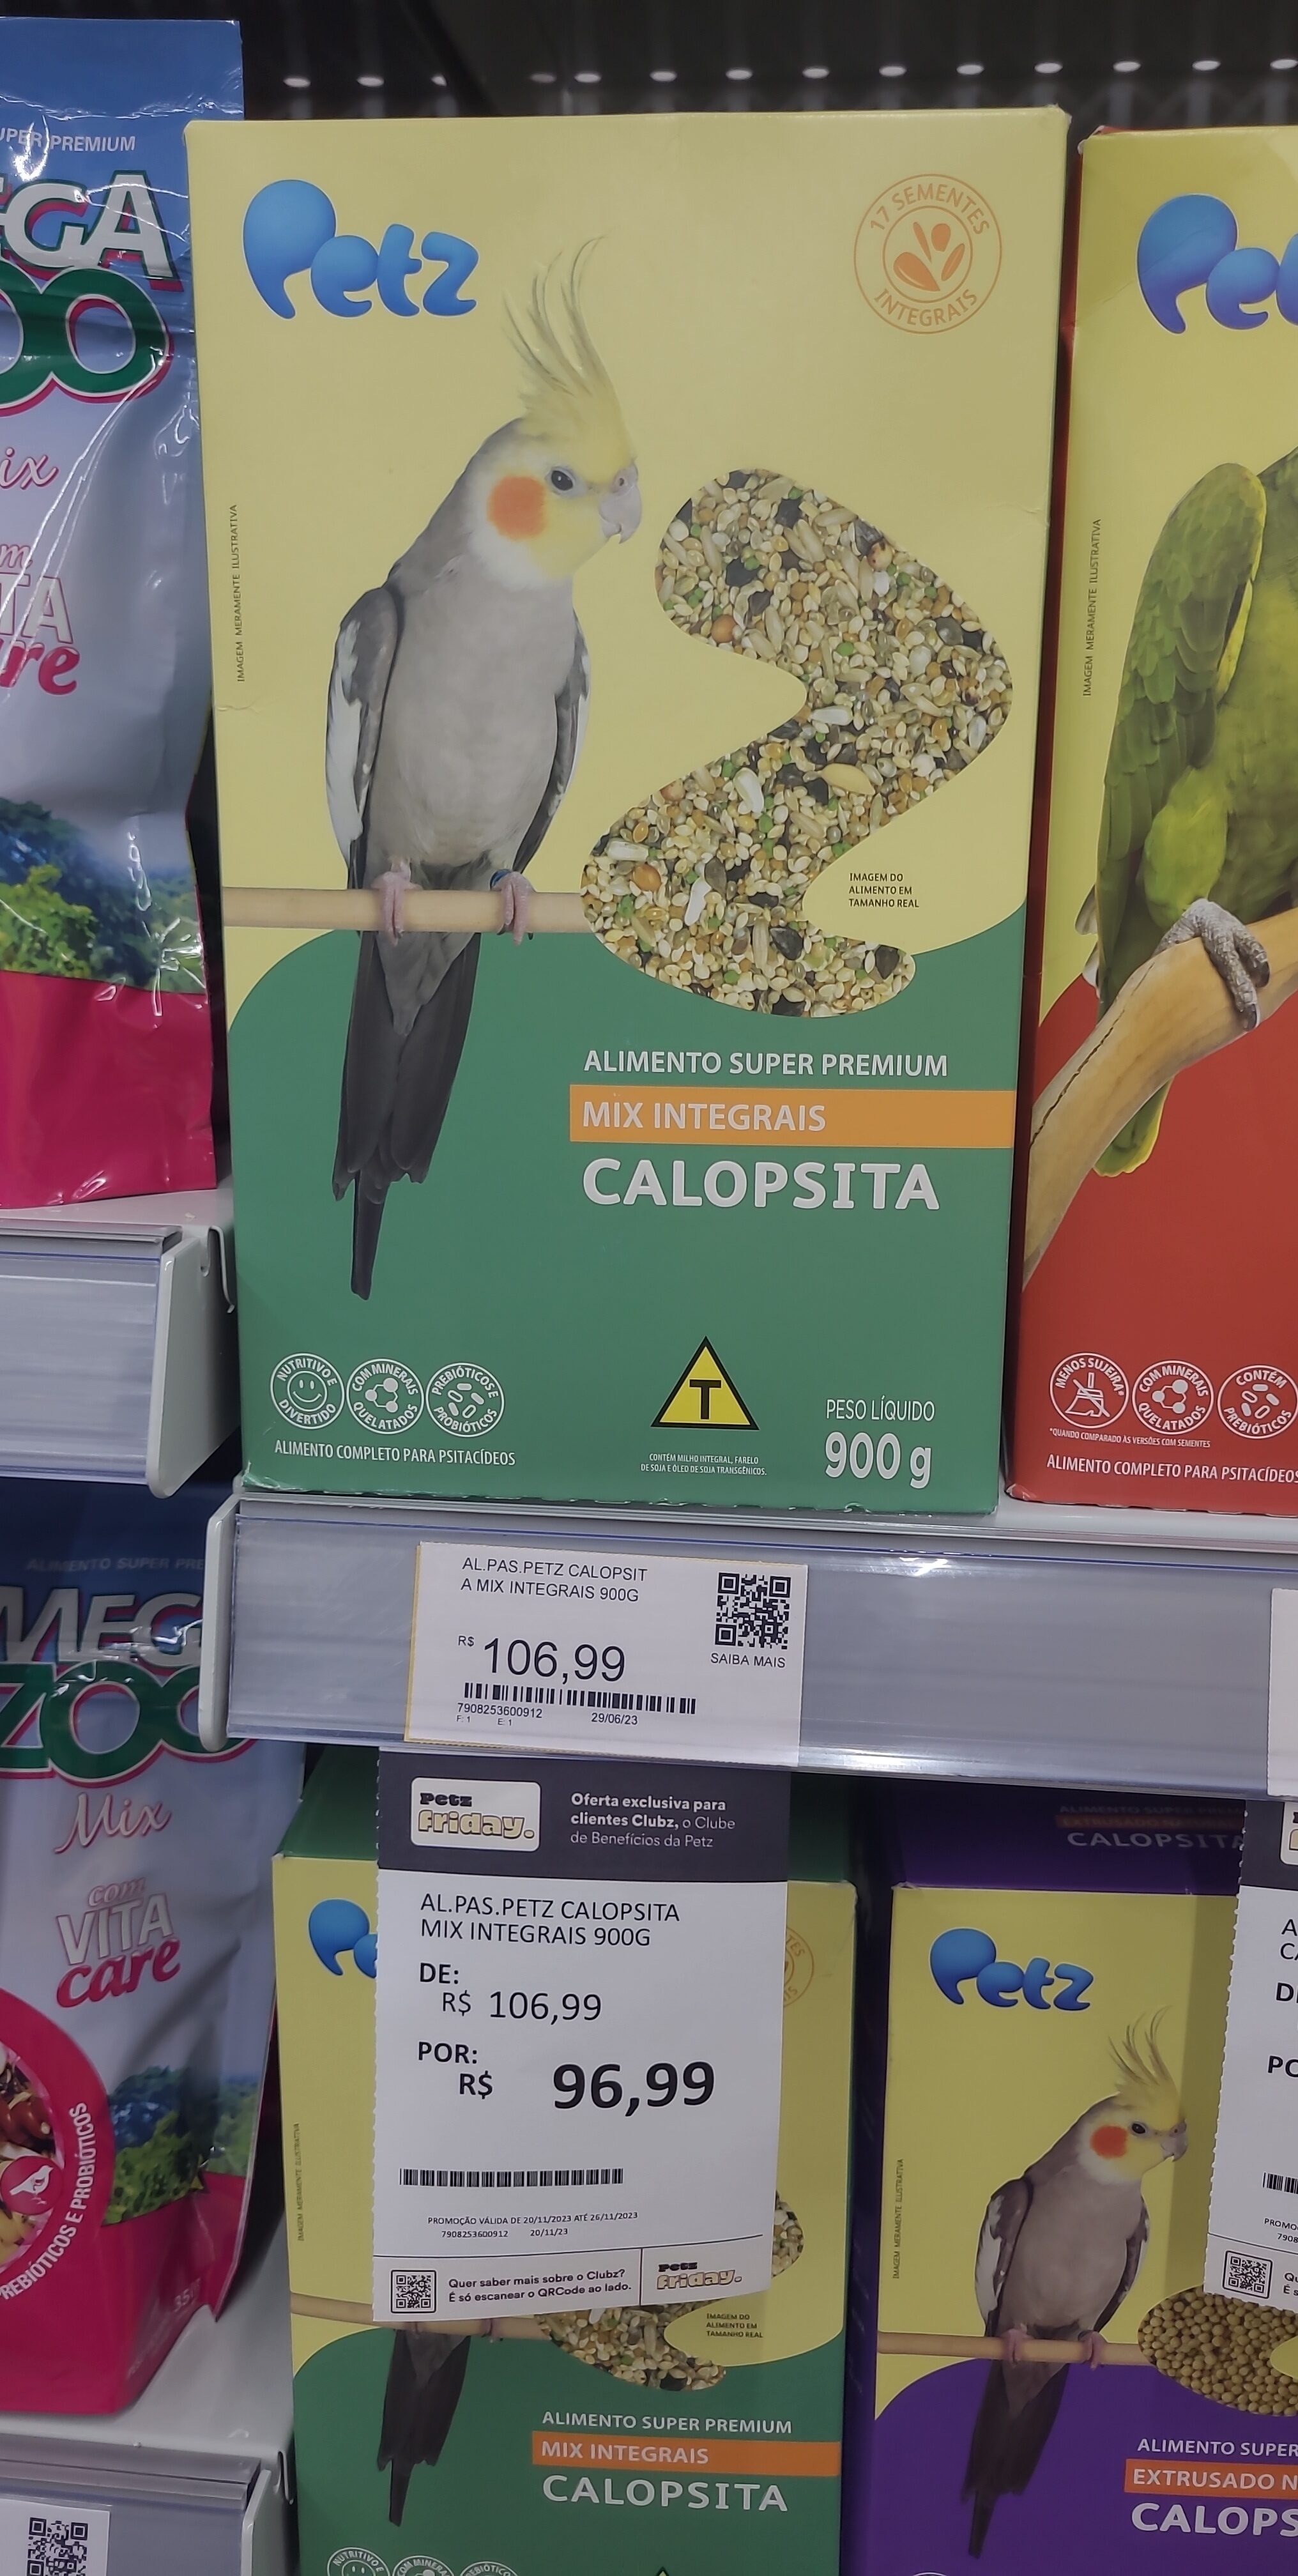 Petz calopsita 900g - Product - pt